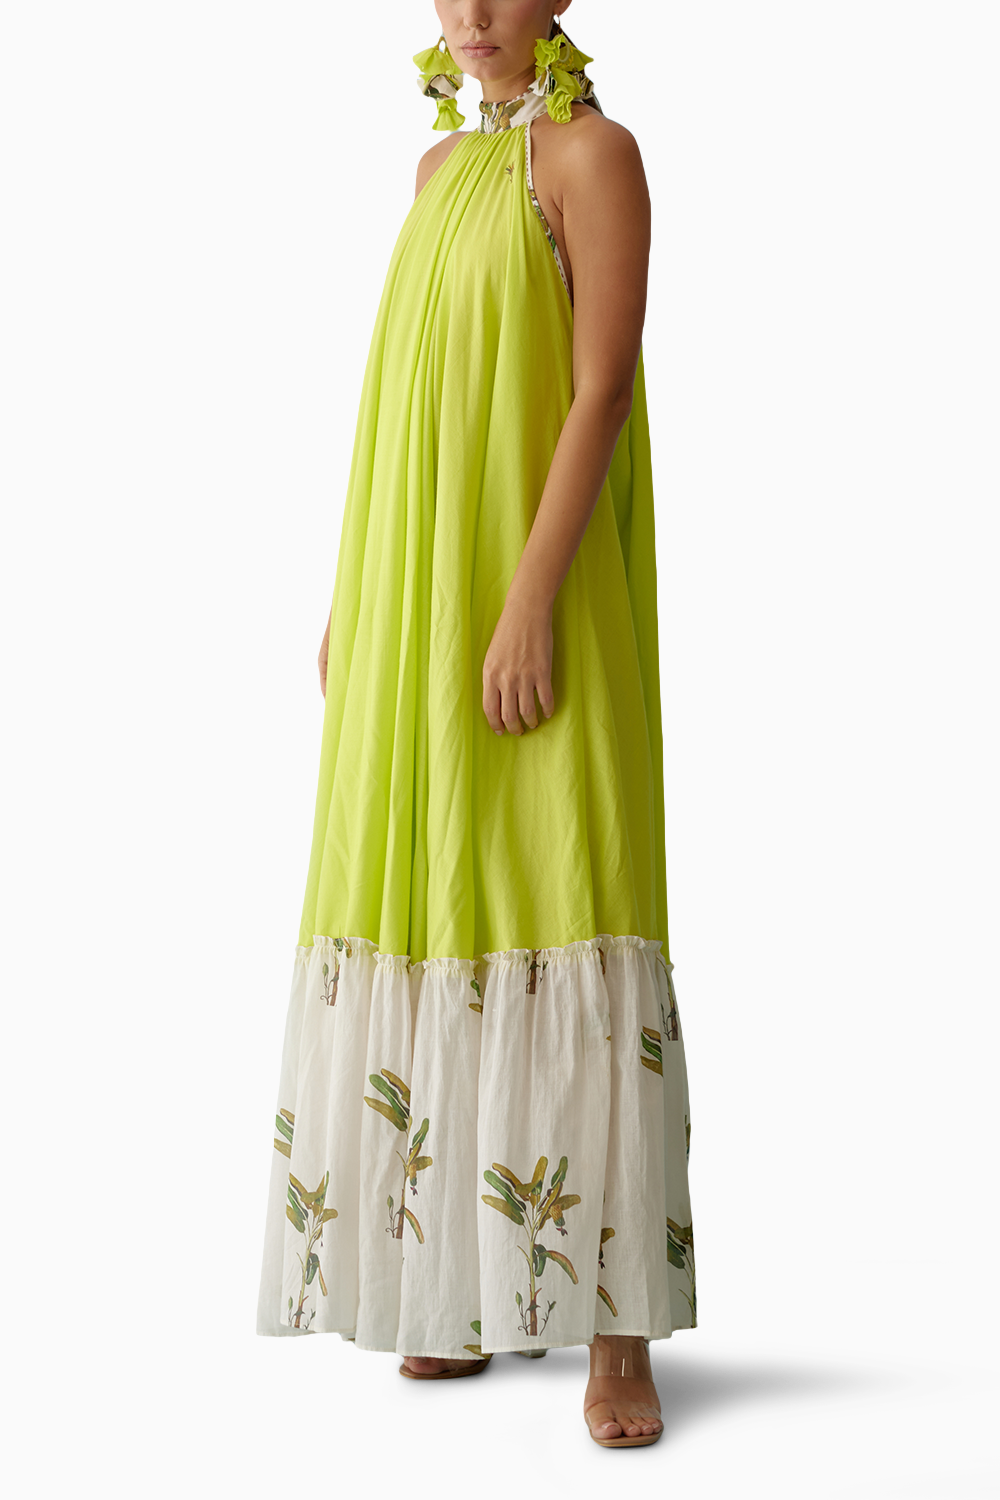 Lime Green Halter Maxi Dress